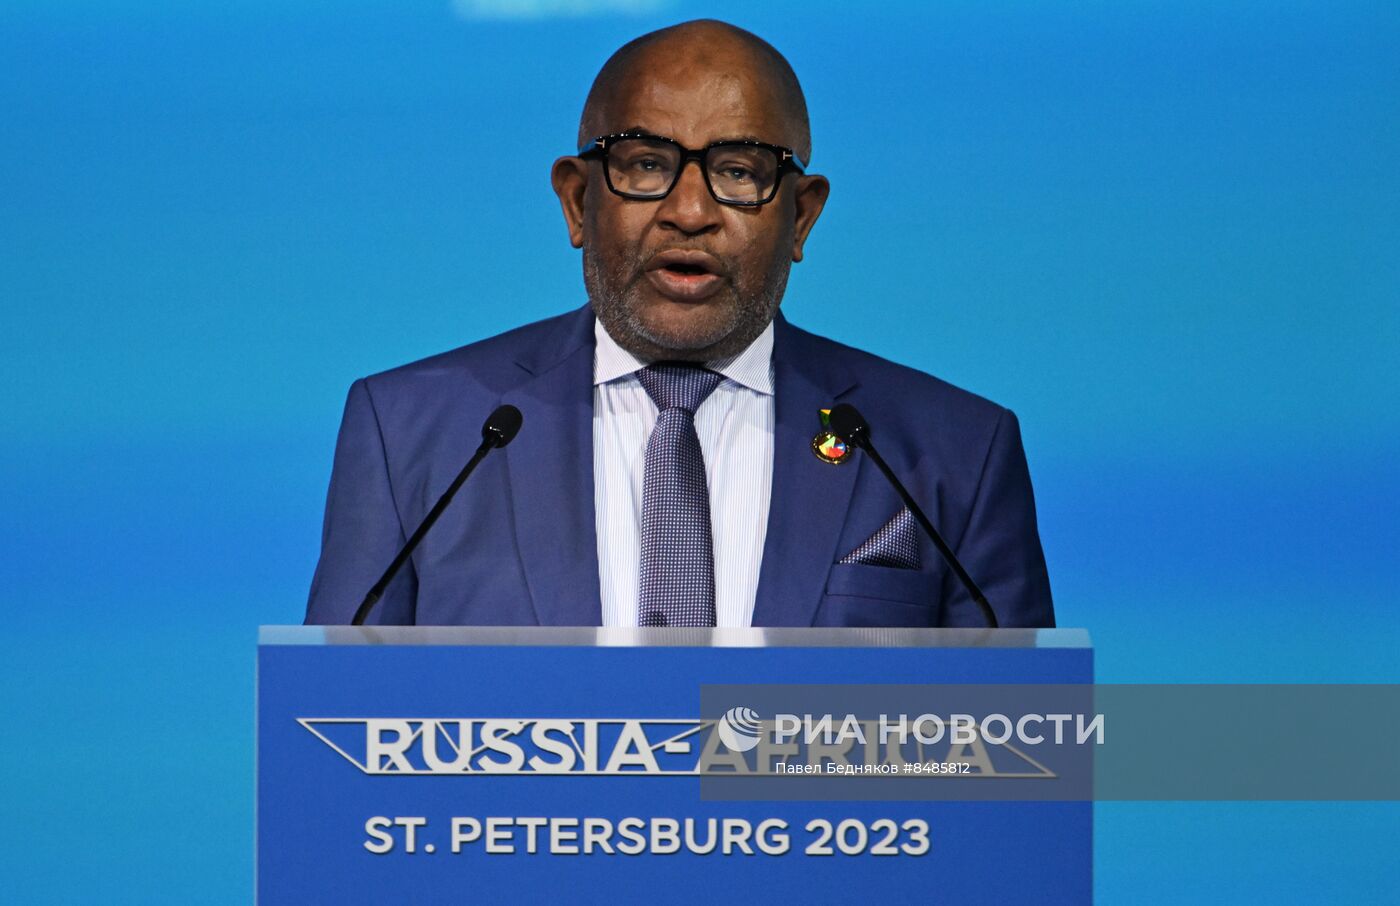 II Cаммит и форум "Россия - Африка". Пленарное заседание 